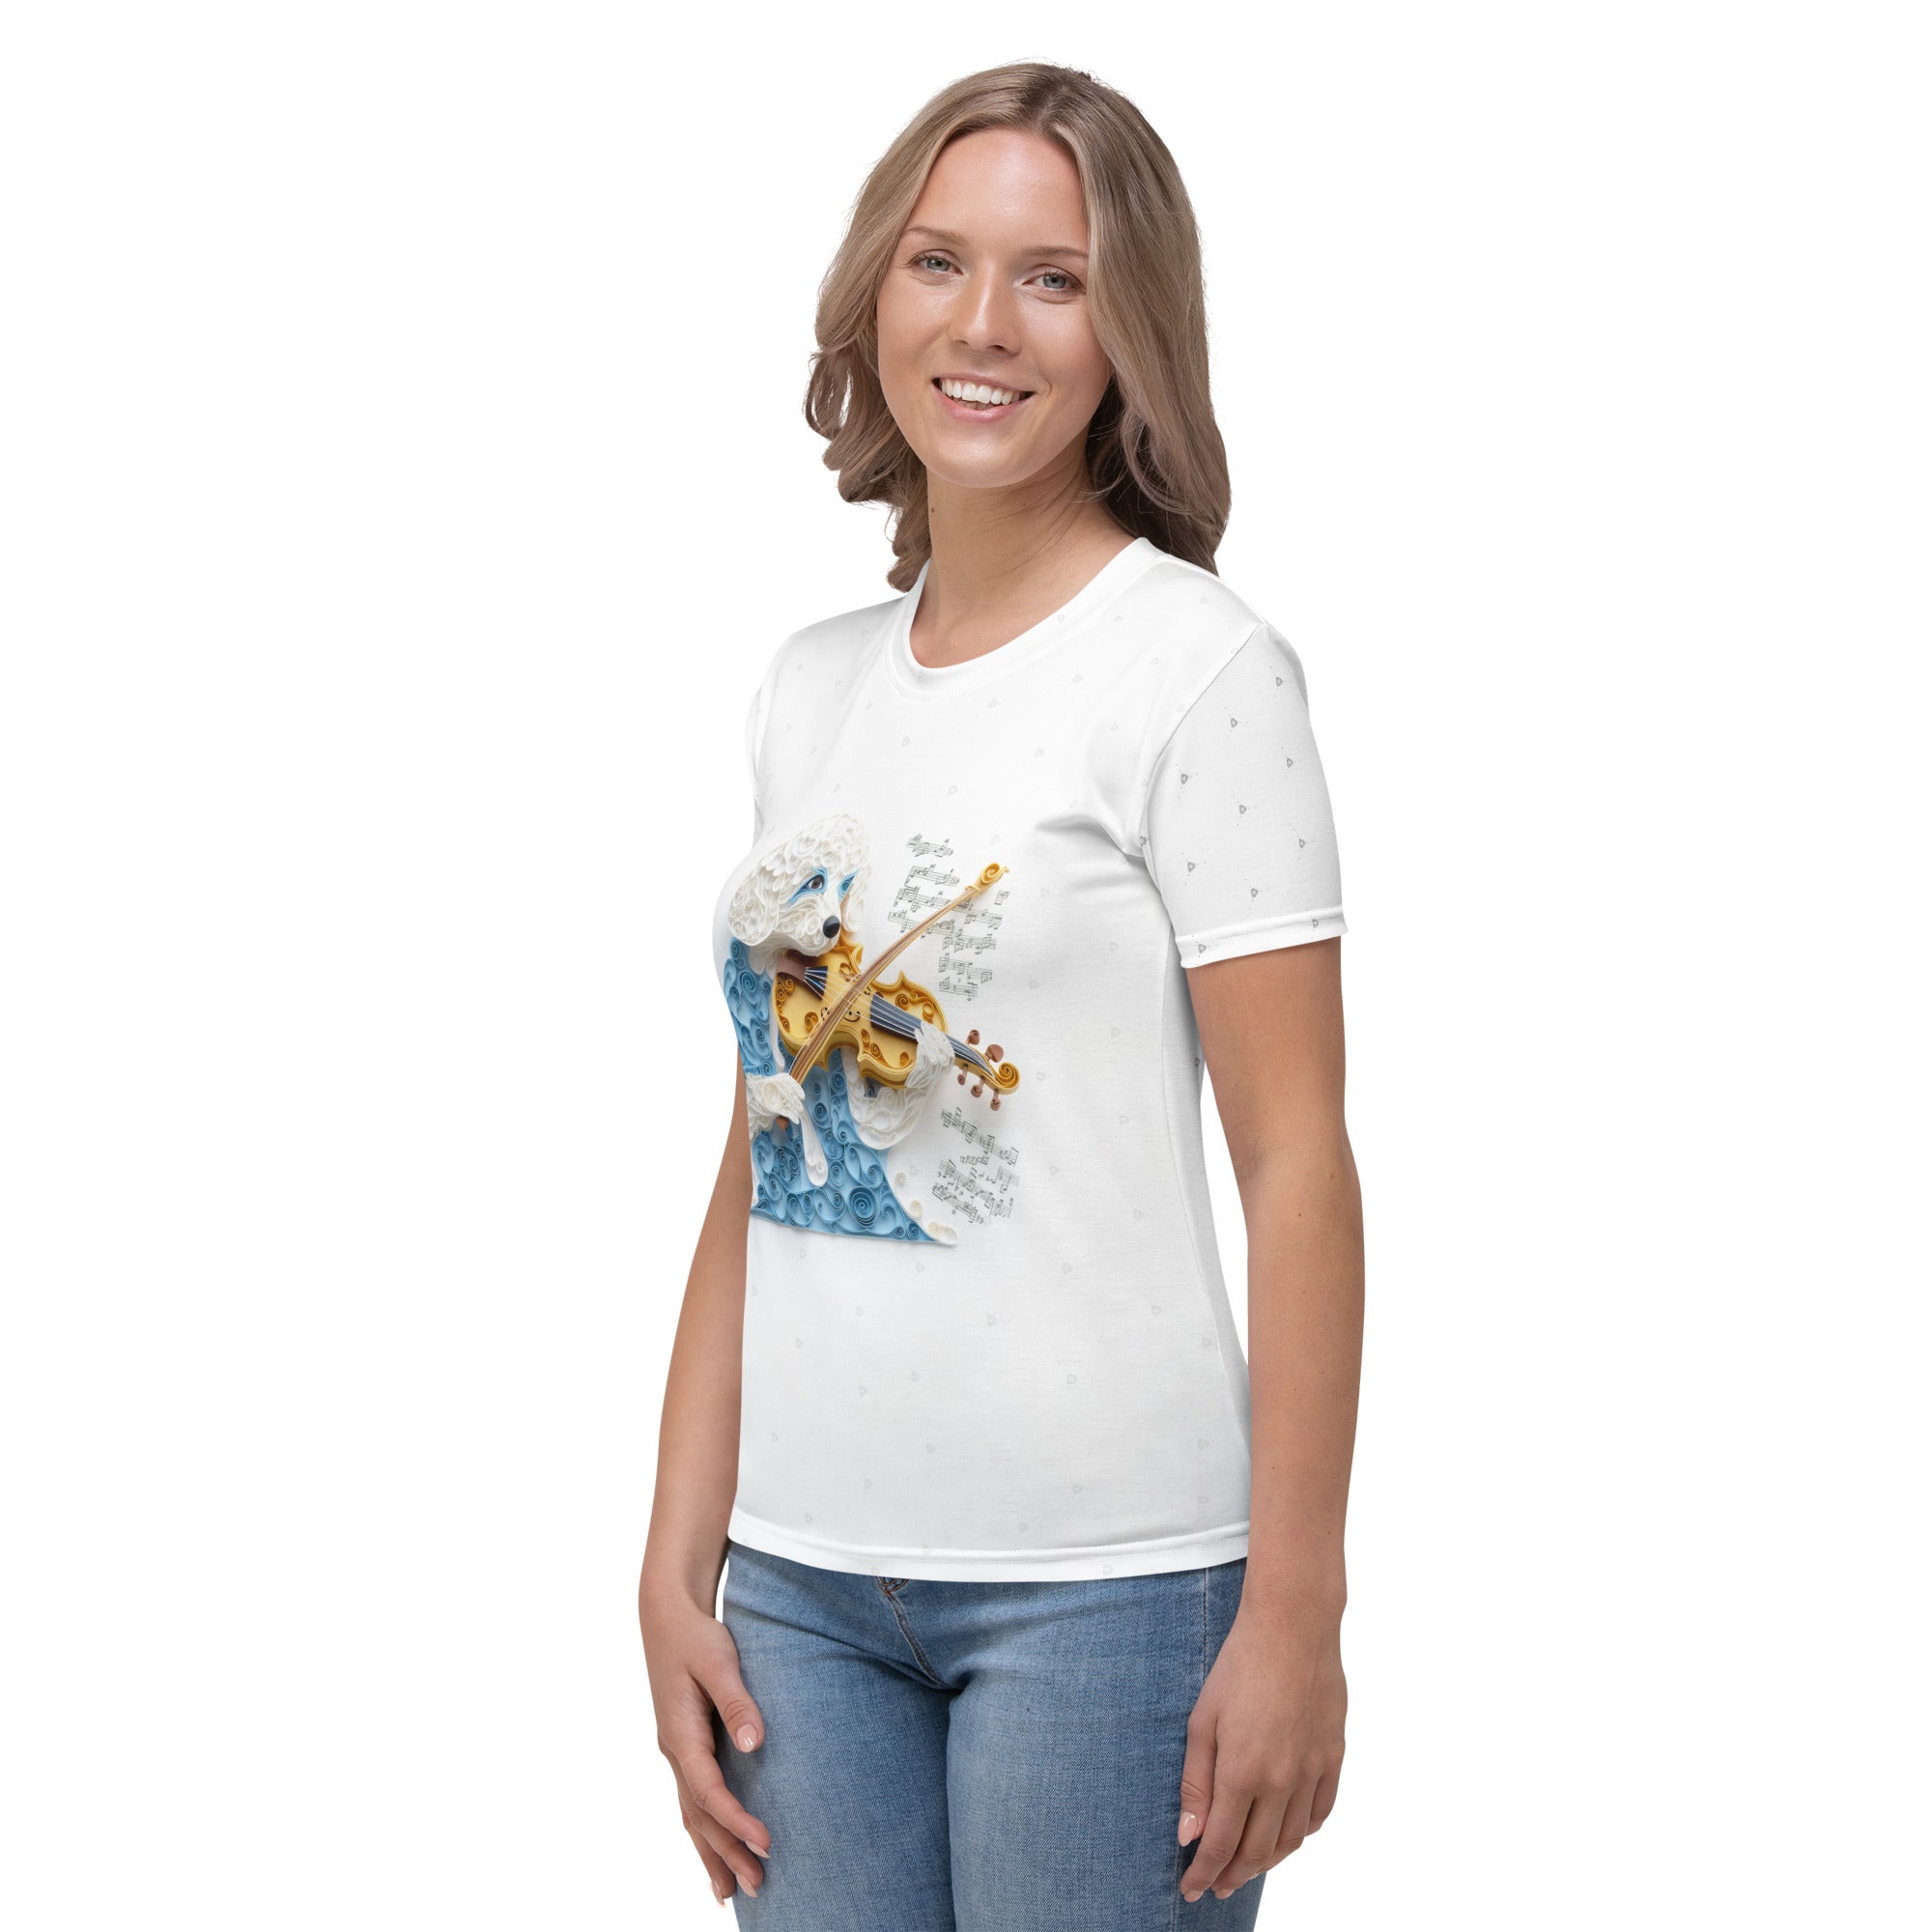 Comfortable women's crew neck T-Shirt featuring willow design.